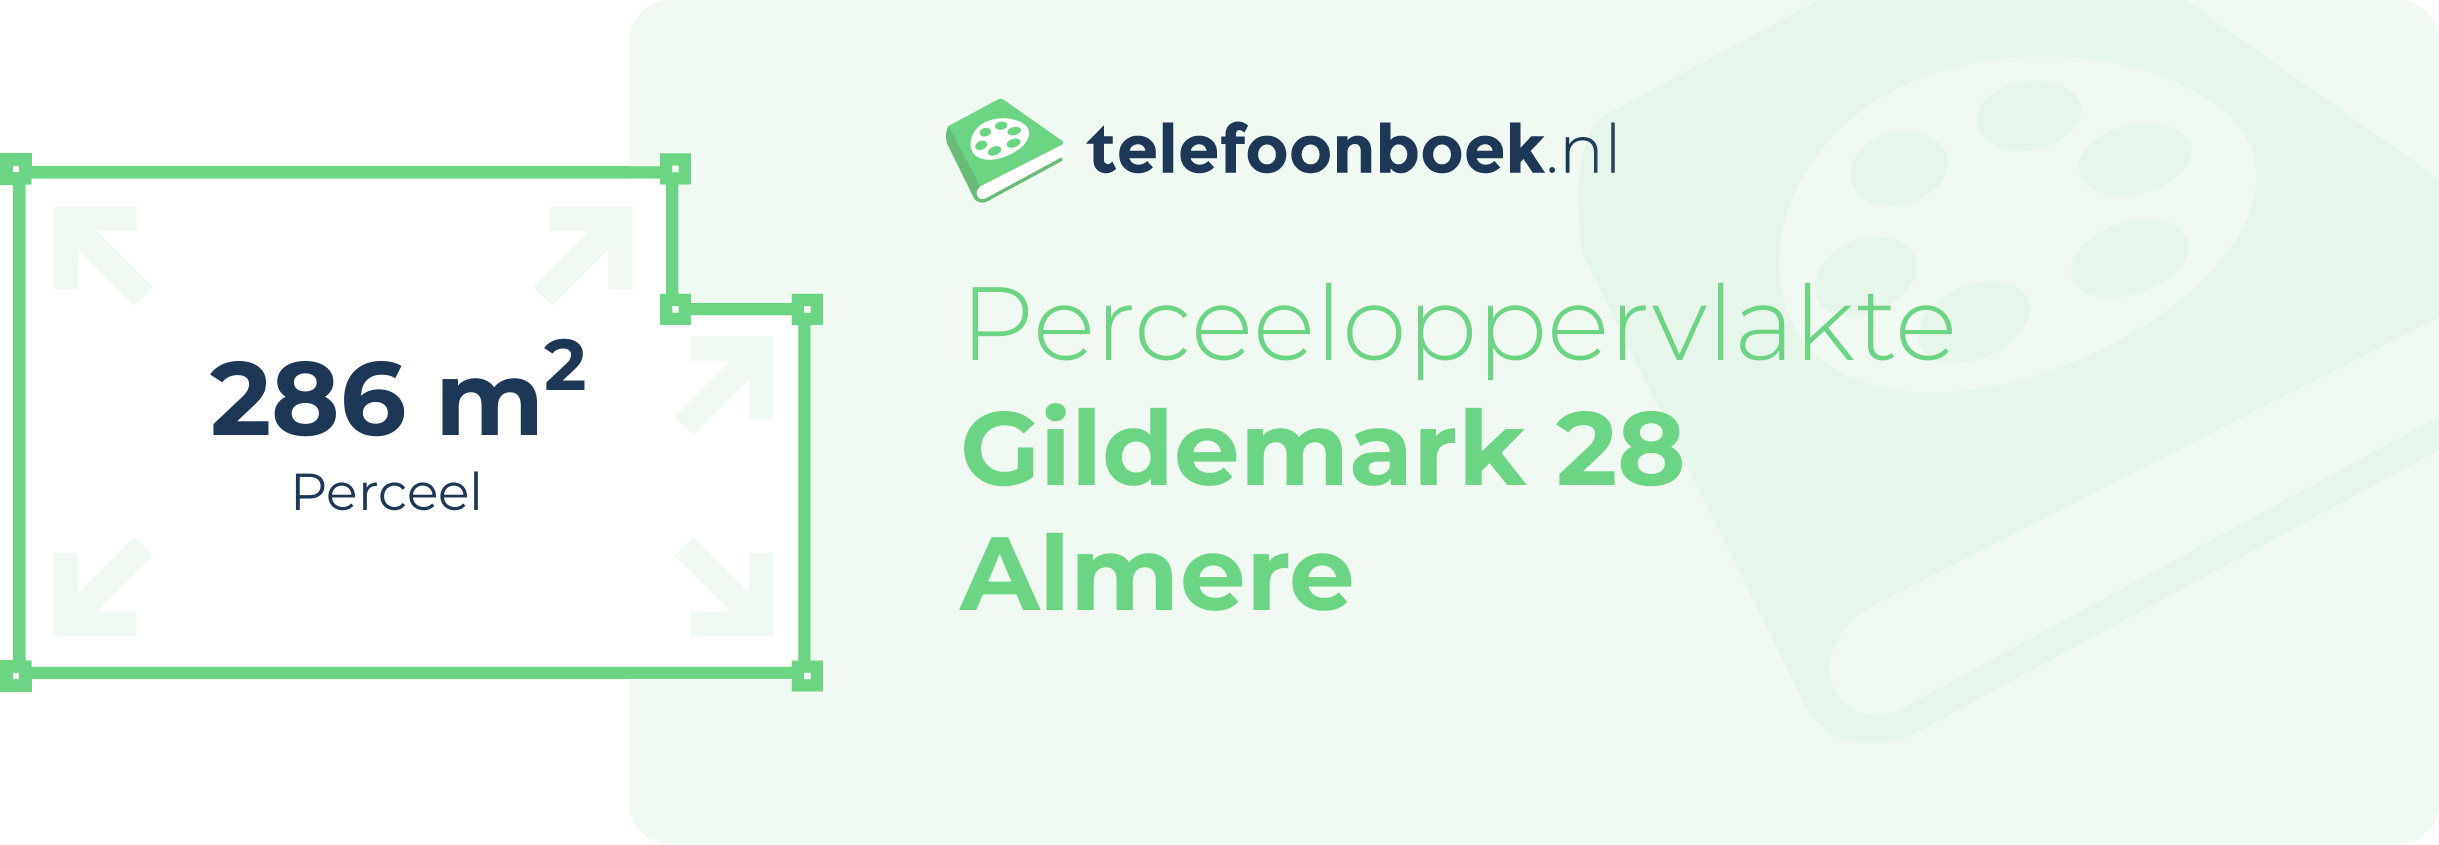 Perceeloppervlakte Gildemark 28 Almere